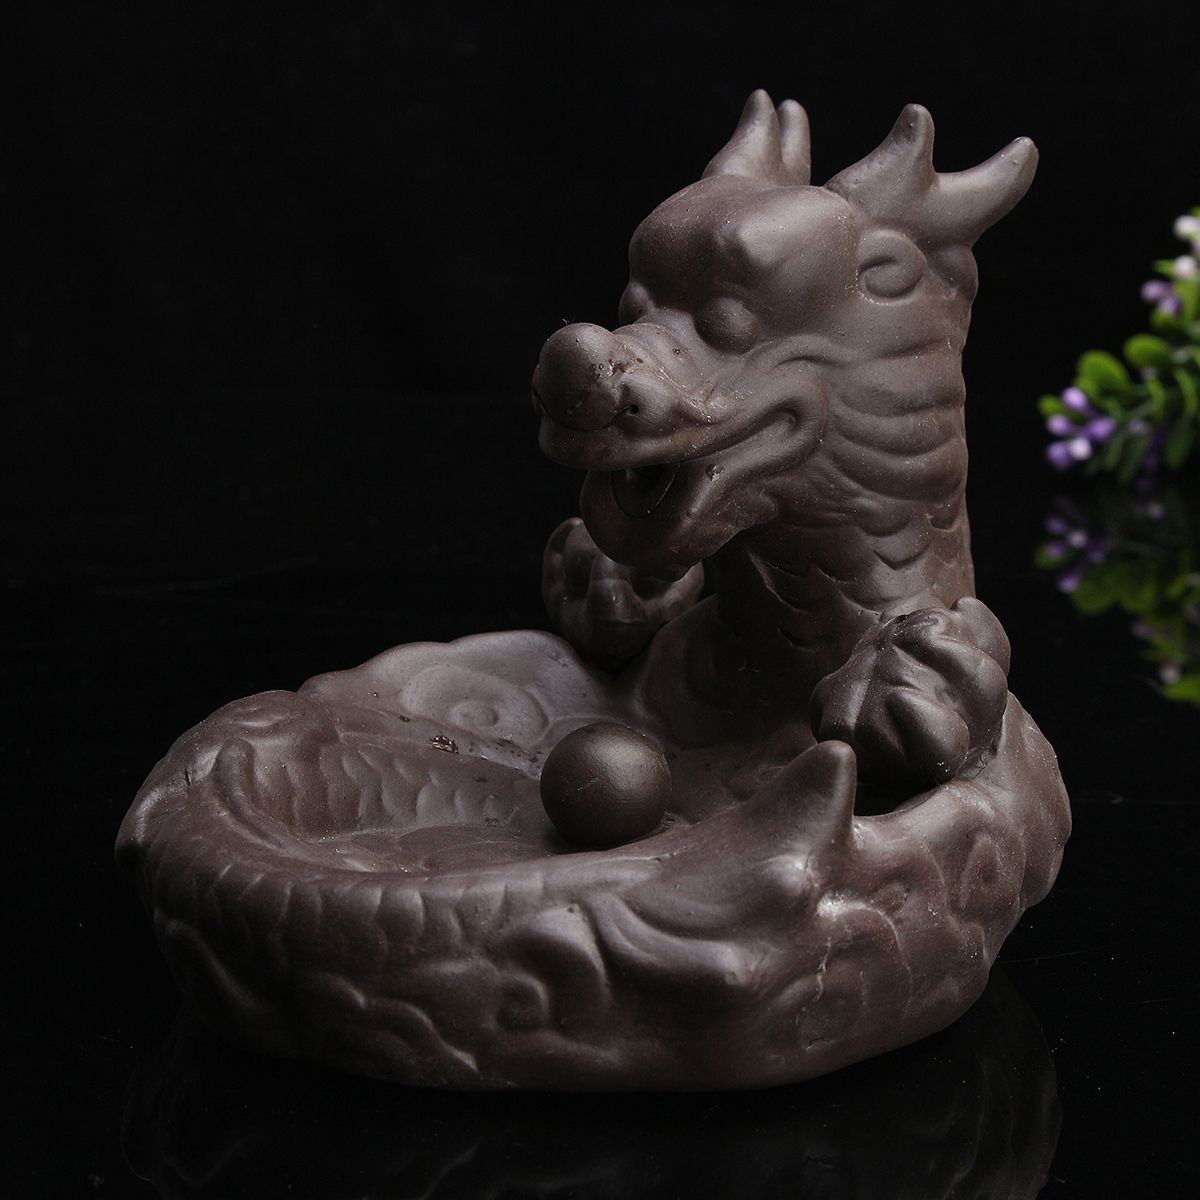 Dragon-Fish-Backflow-Tower-Burner-Holder-Ceramic-With-10Pcs-Cone-Incense-Decor-1304897